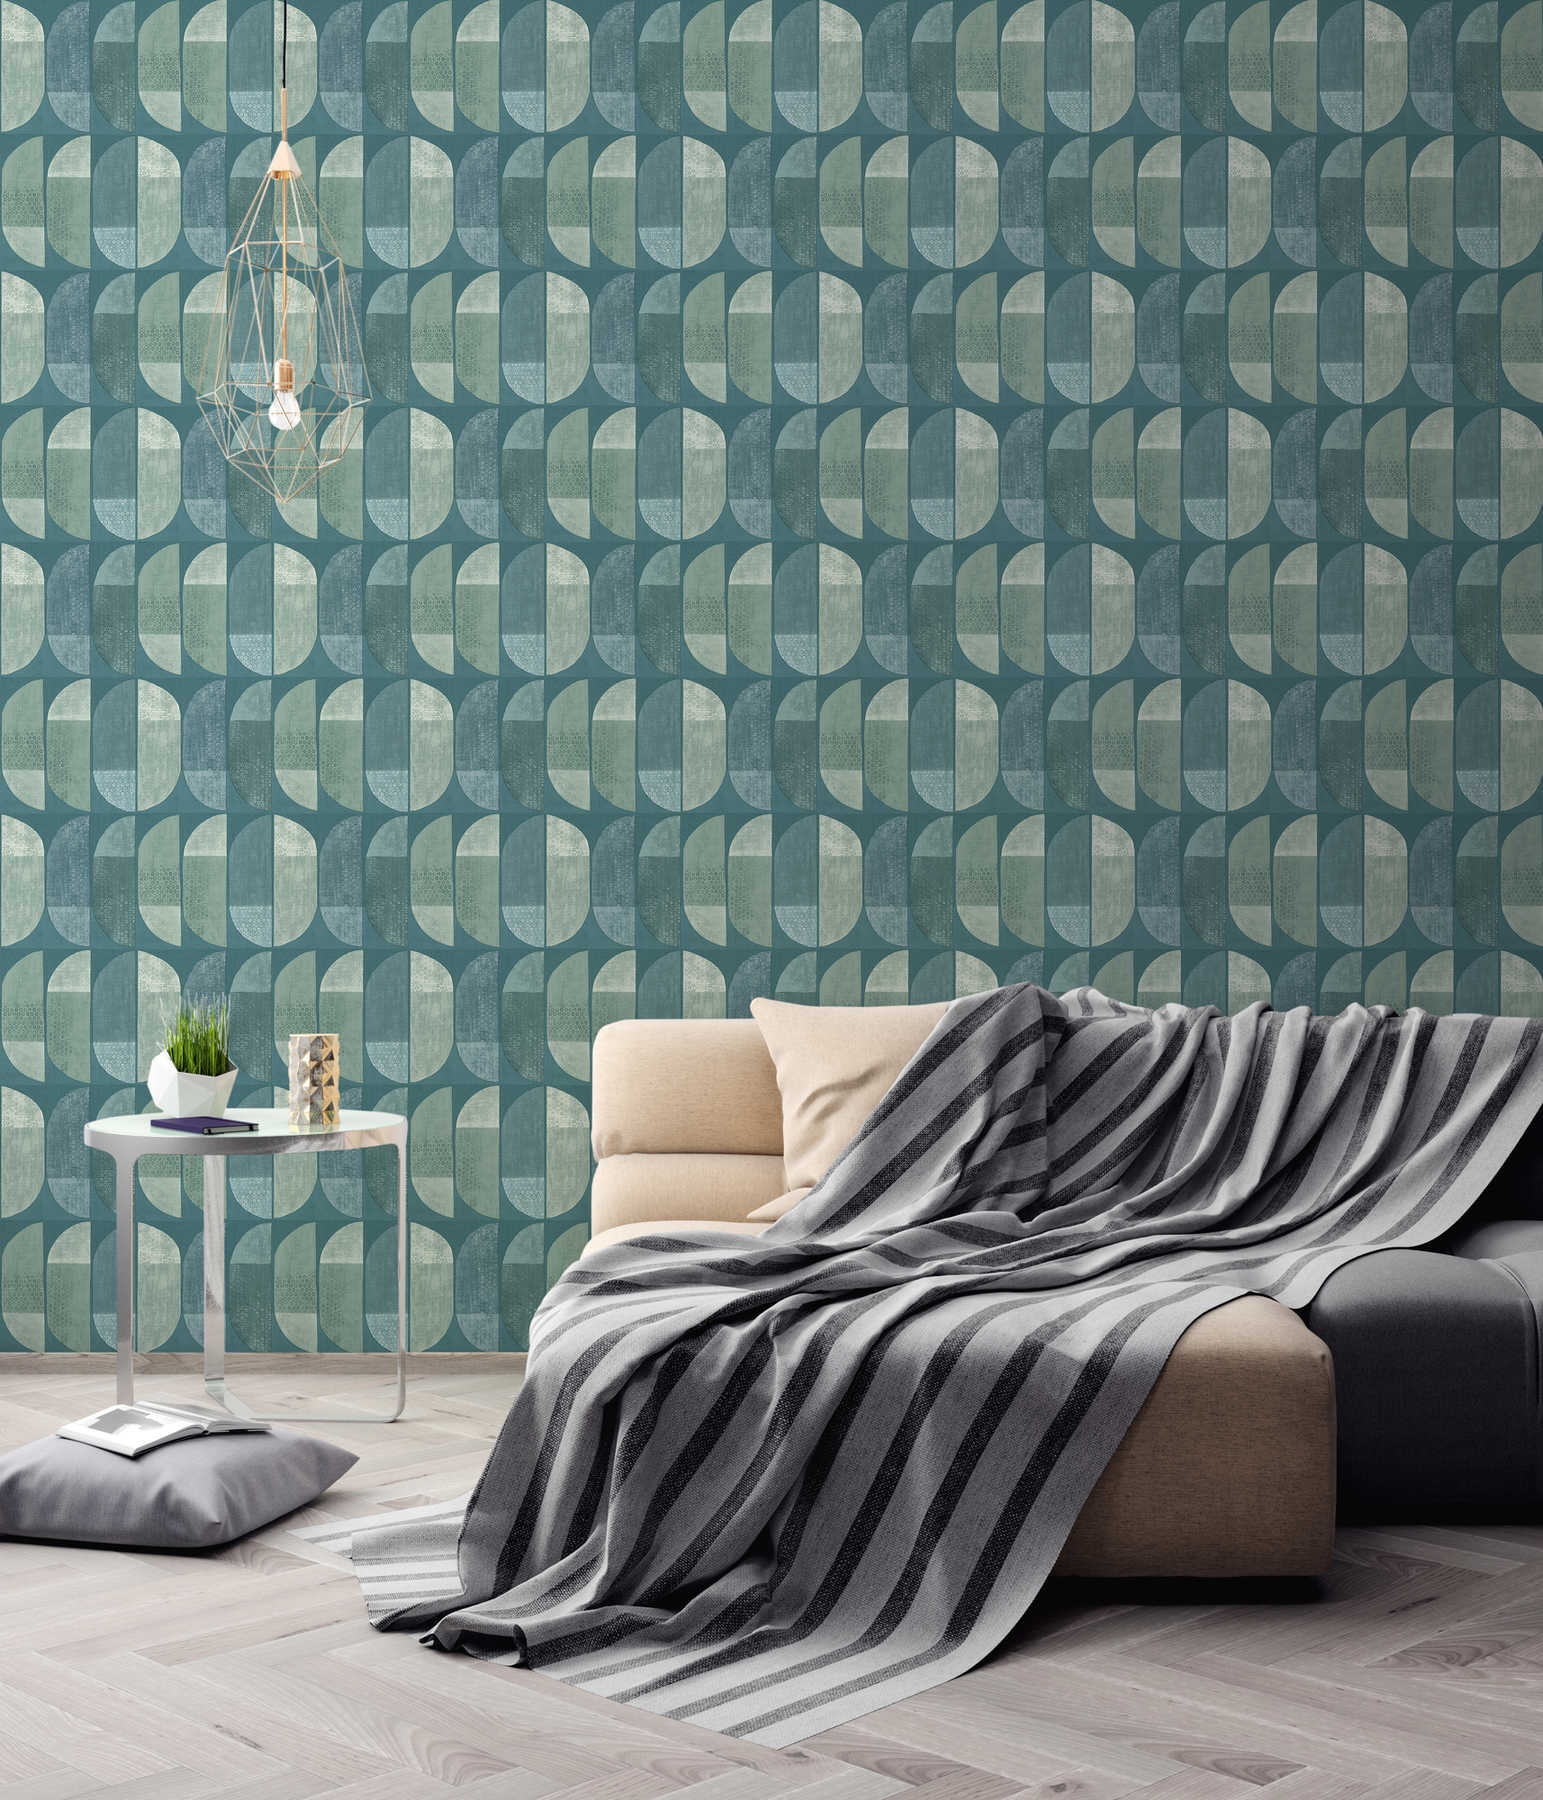             Tapete geometrisches Retro-Muster, Scandinavian Style - Blau, Grün
        